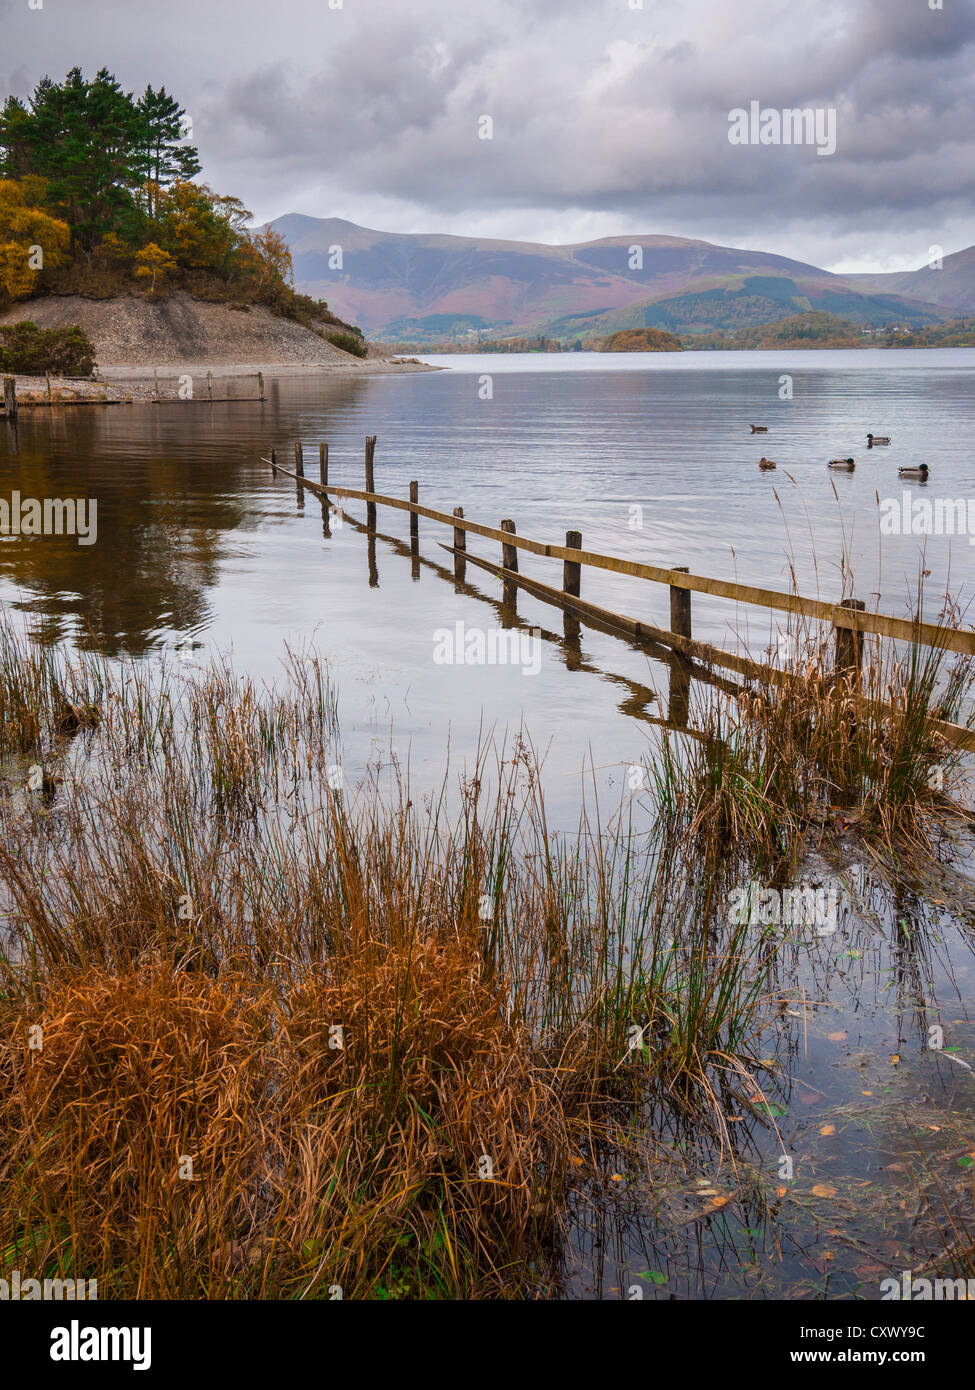 Derwent Water et Skiddaw dans le parc national Lake District, Keswic, Cumbria, Angleterre. Banque D'Images